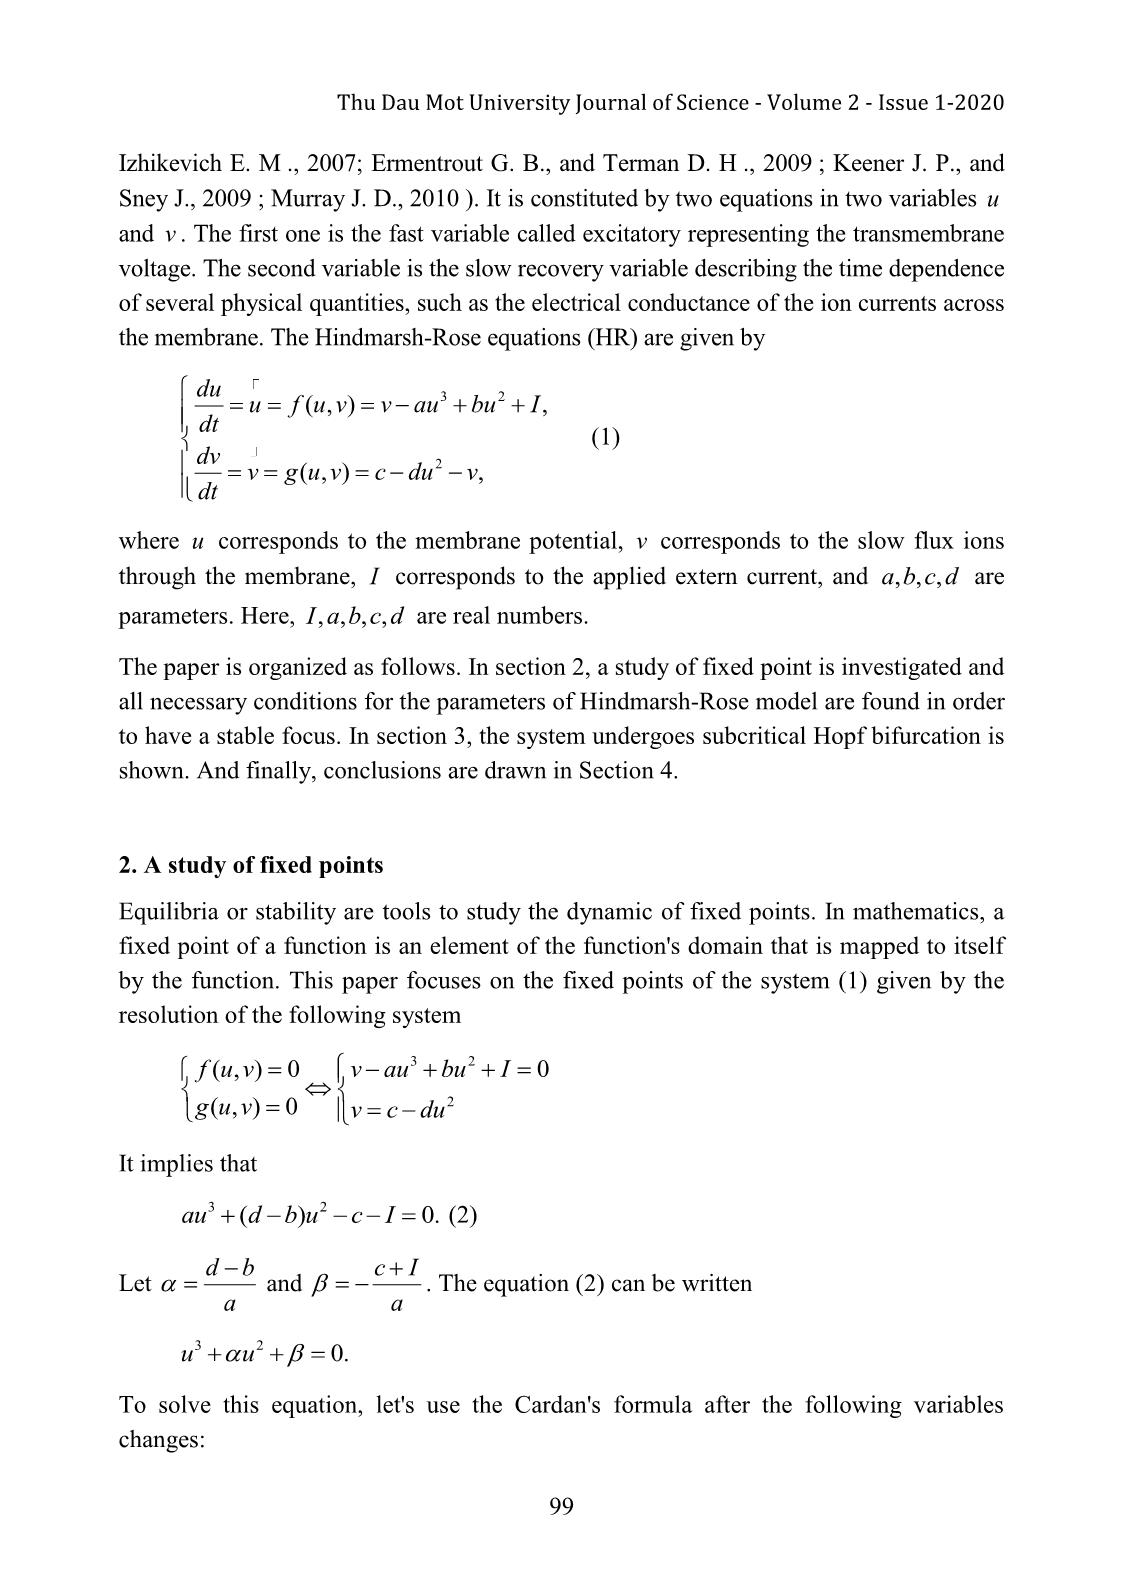 A study of fixed points and hopf bifurcation of hindmarshrose model trang 2